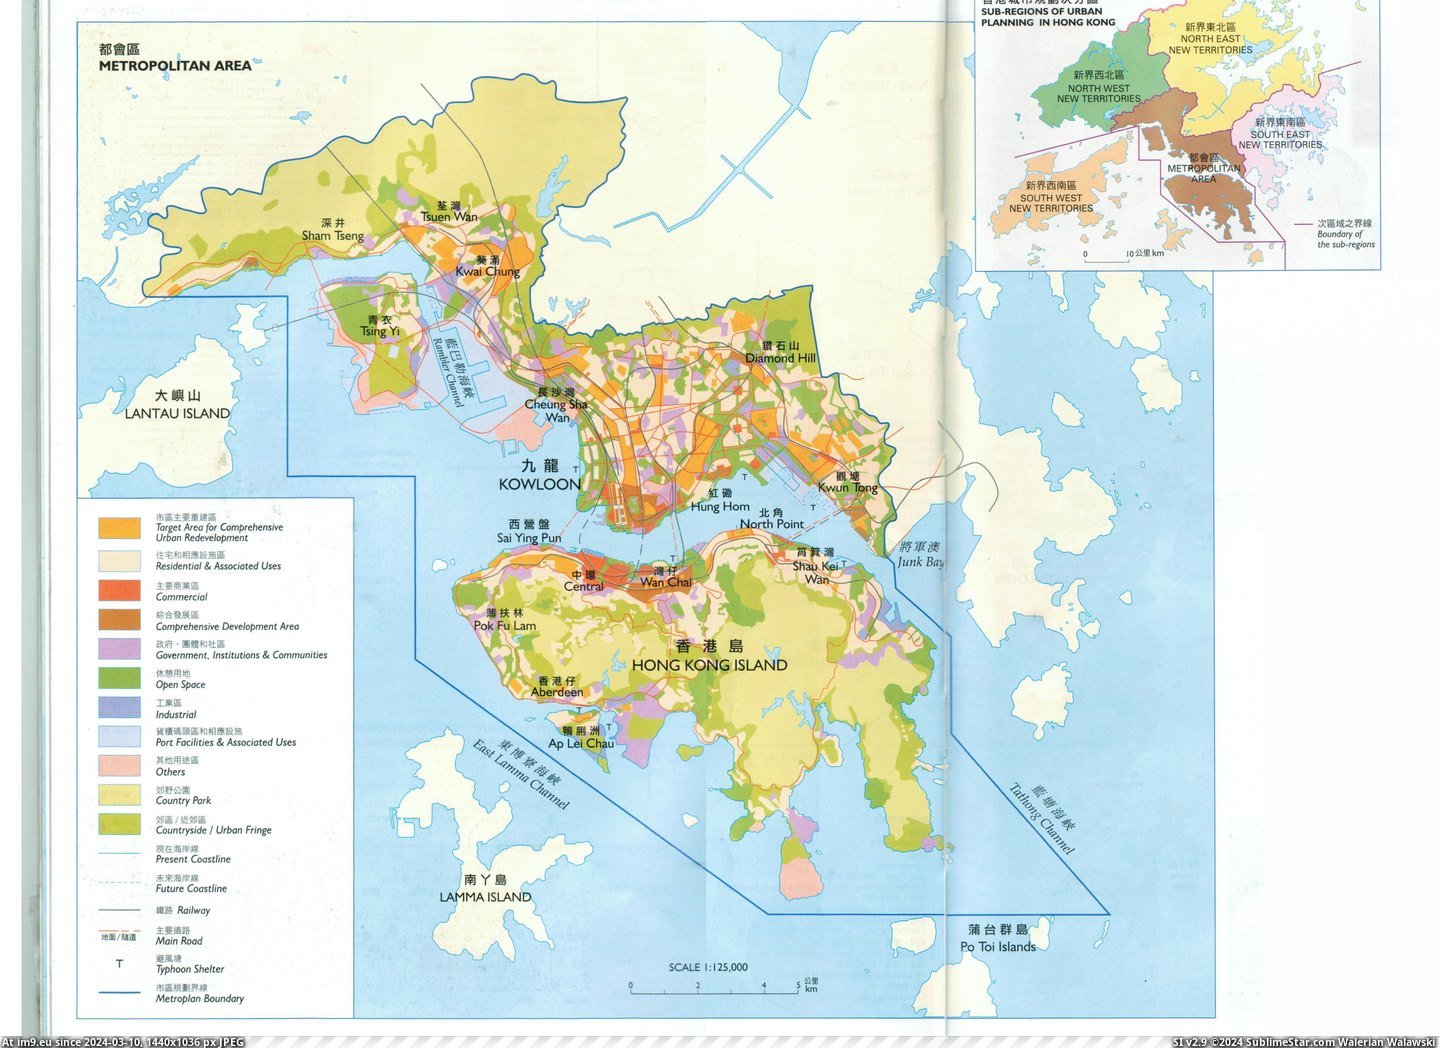 #Metropolitan #Area #Kong #Land #Hong [Mapporn] Land Use of the Metropolitan Area of Hong Kong [4076x2945] Pic. (Image of album My r/MAPS favs))